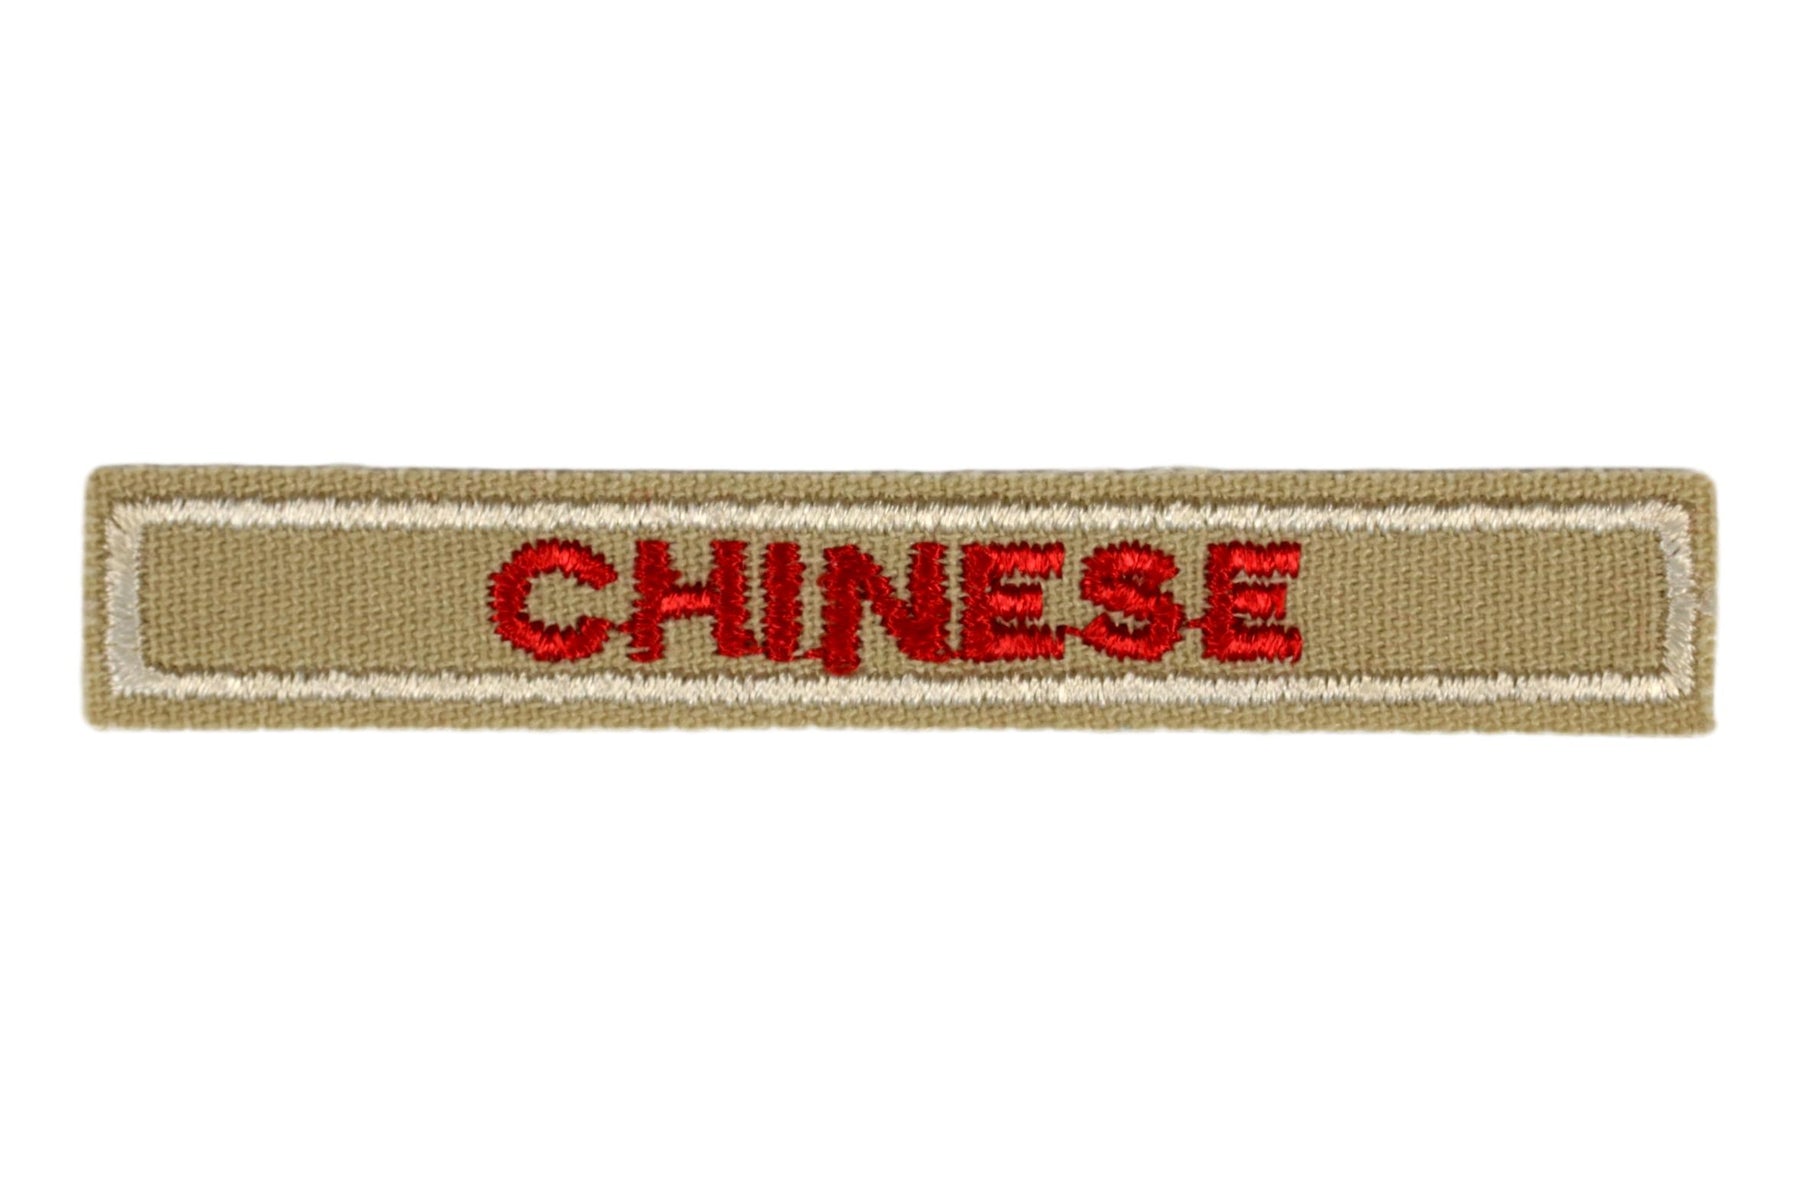 Chinese Interpreter Strip Tan